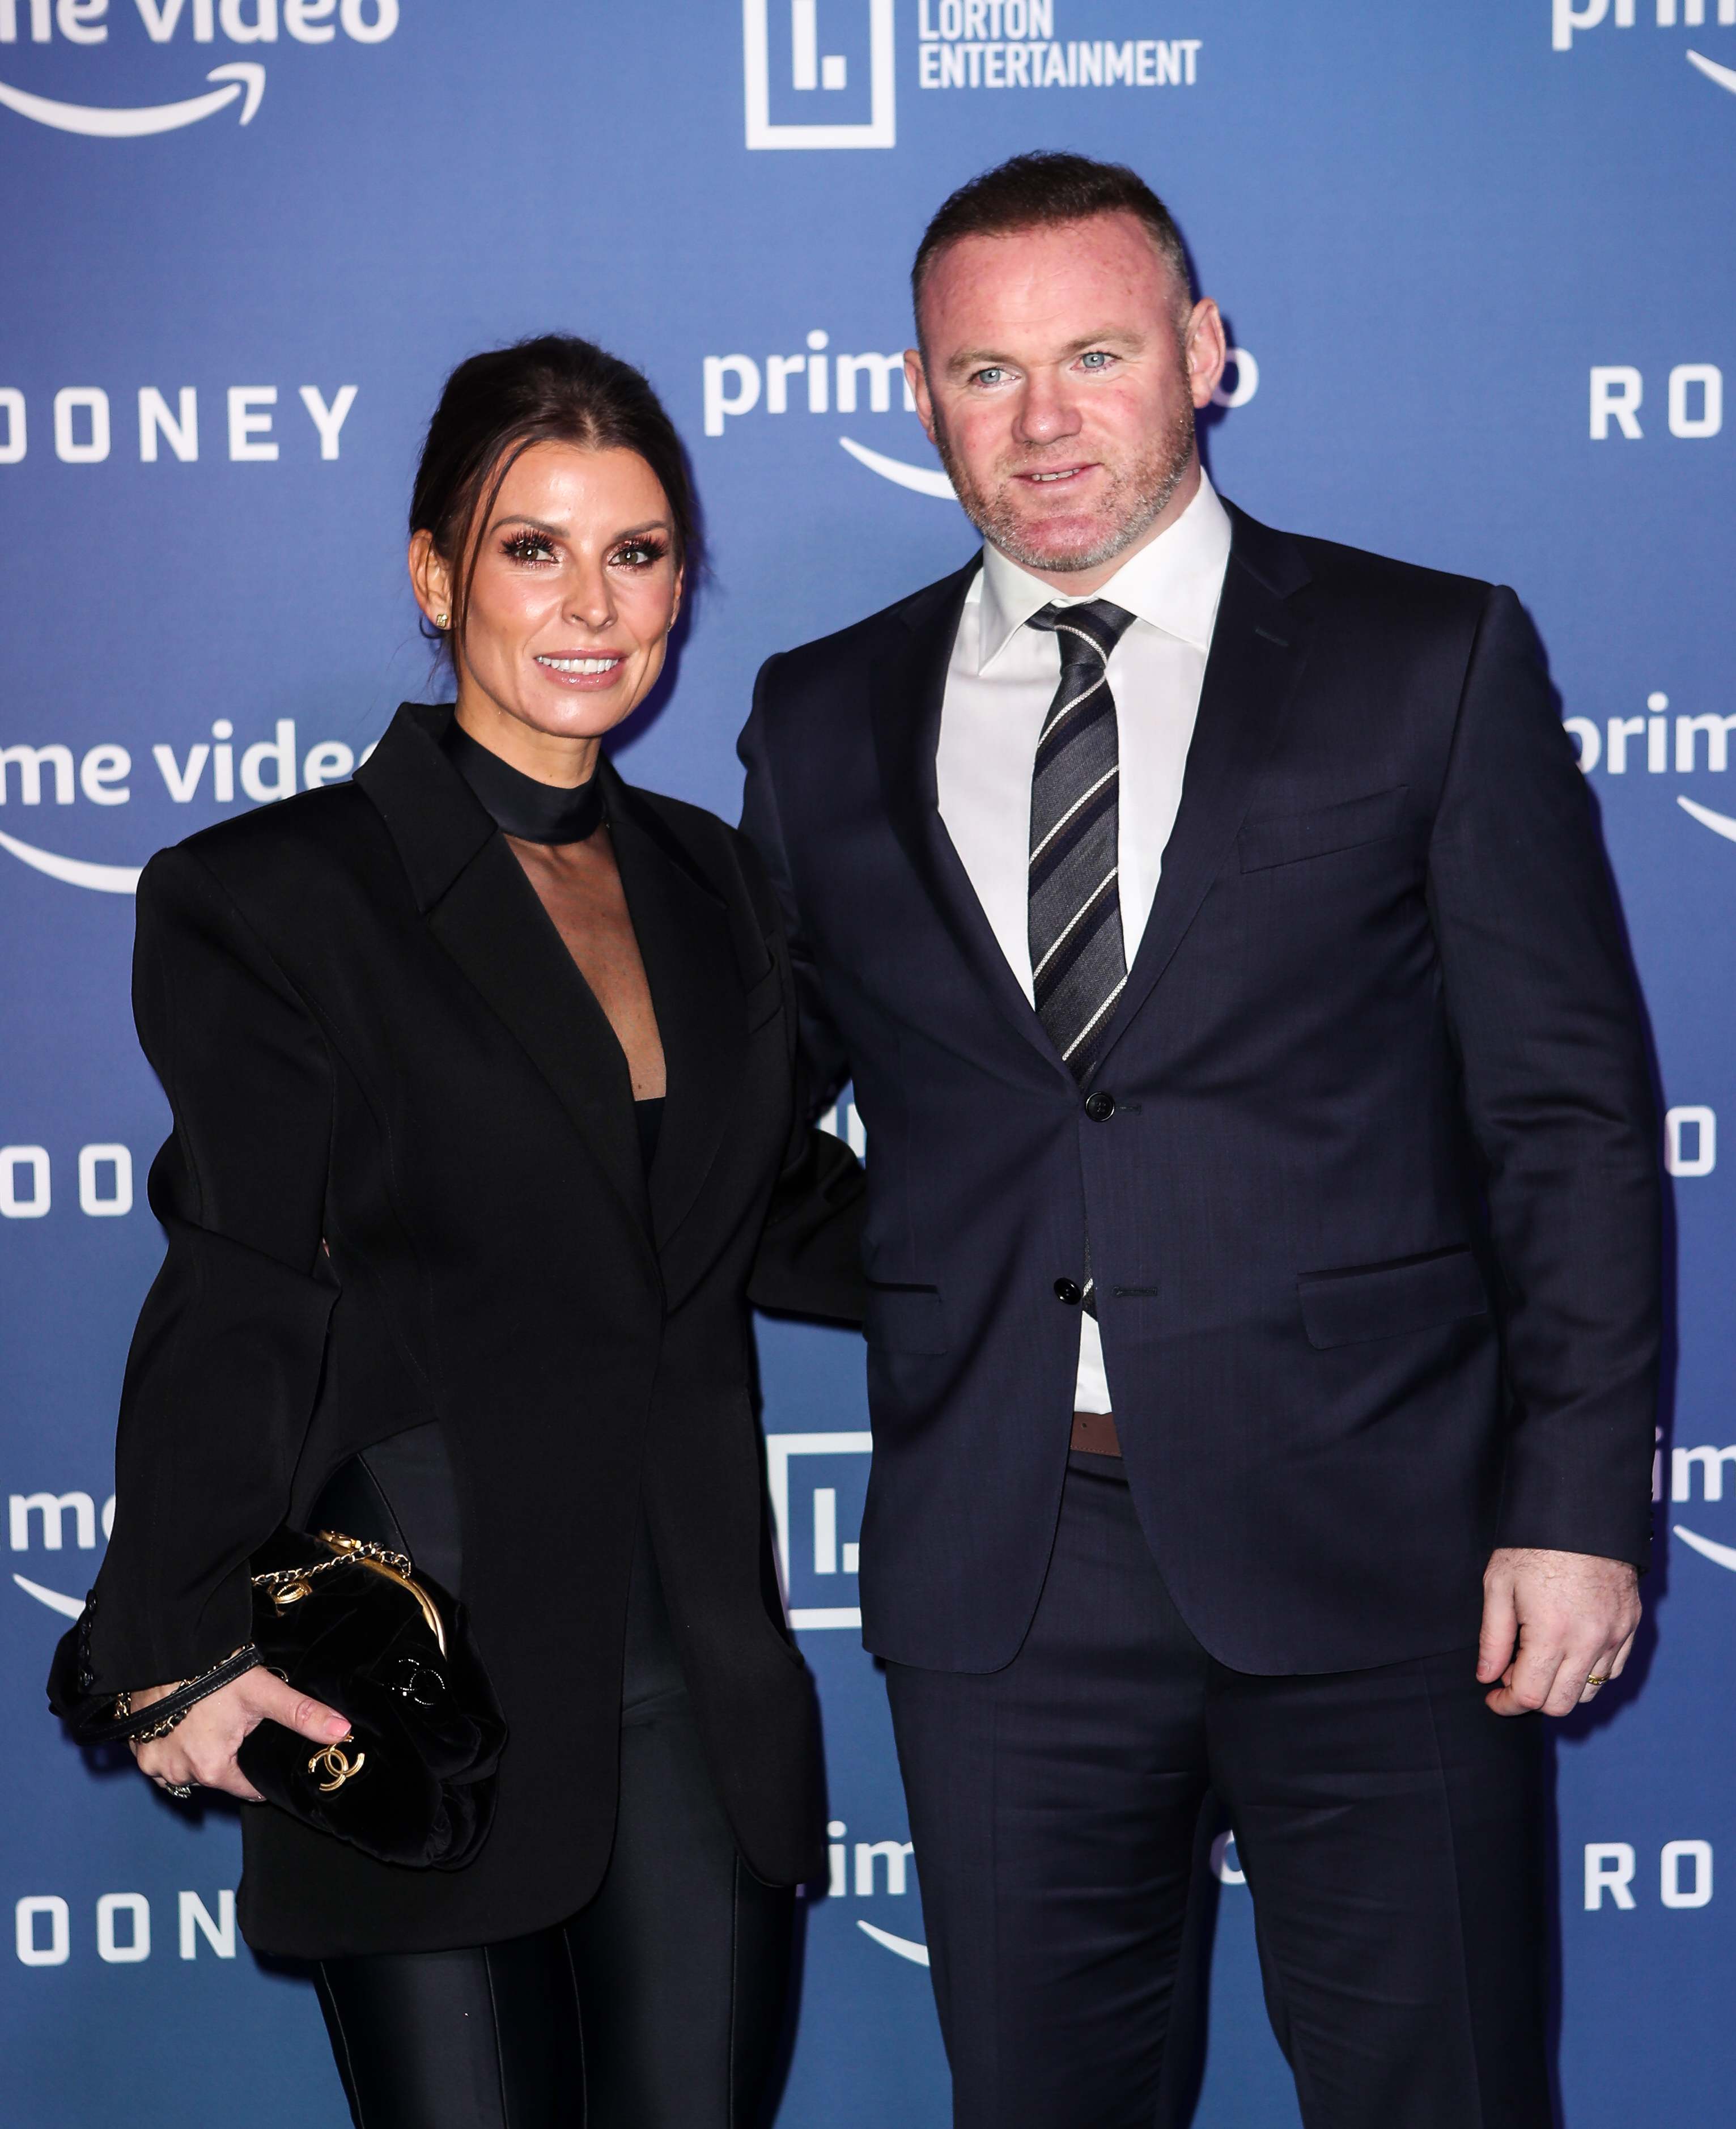 Coleen Rooney hat Wayne in mehreren Skandalen zur Seite gestanden